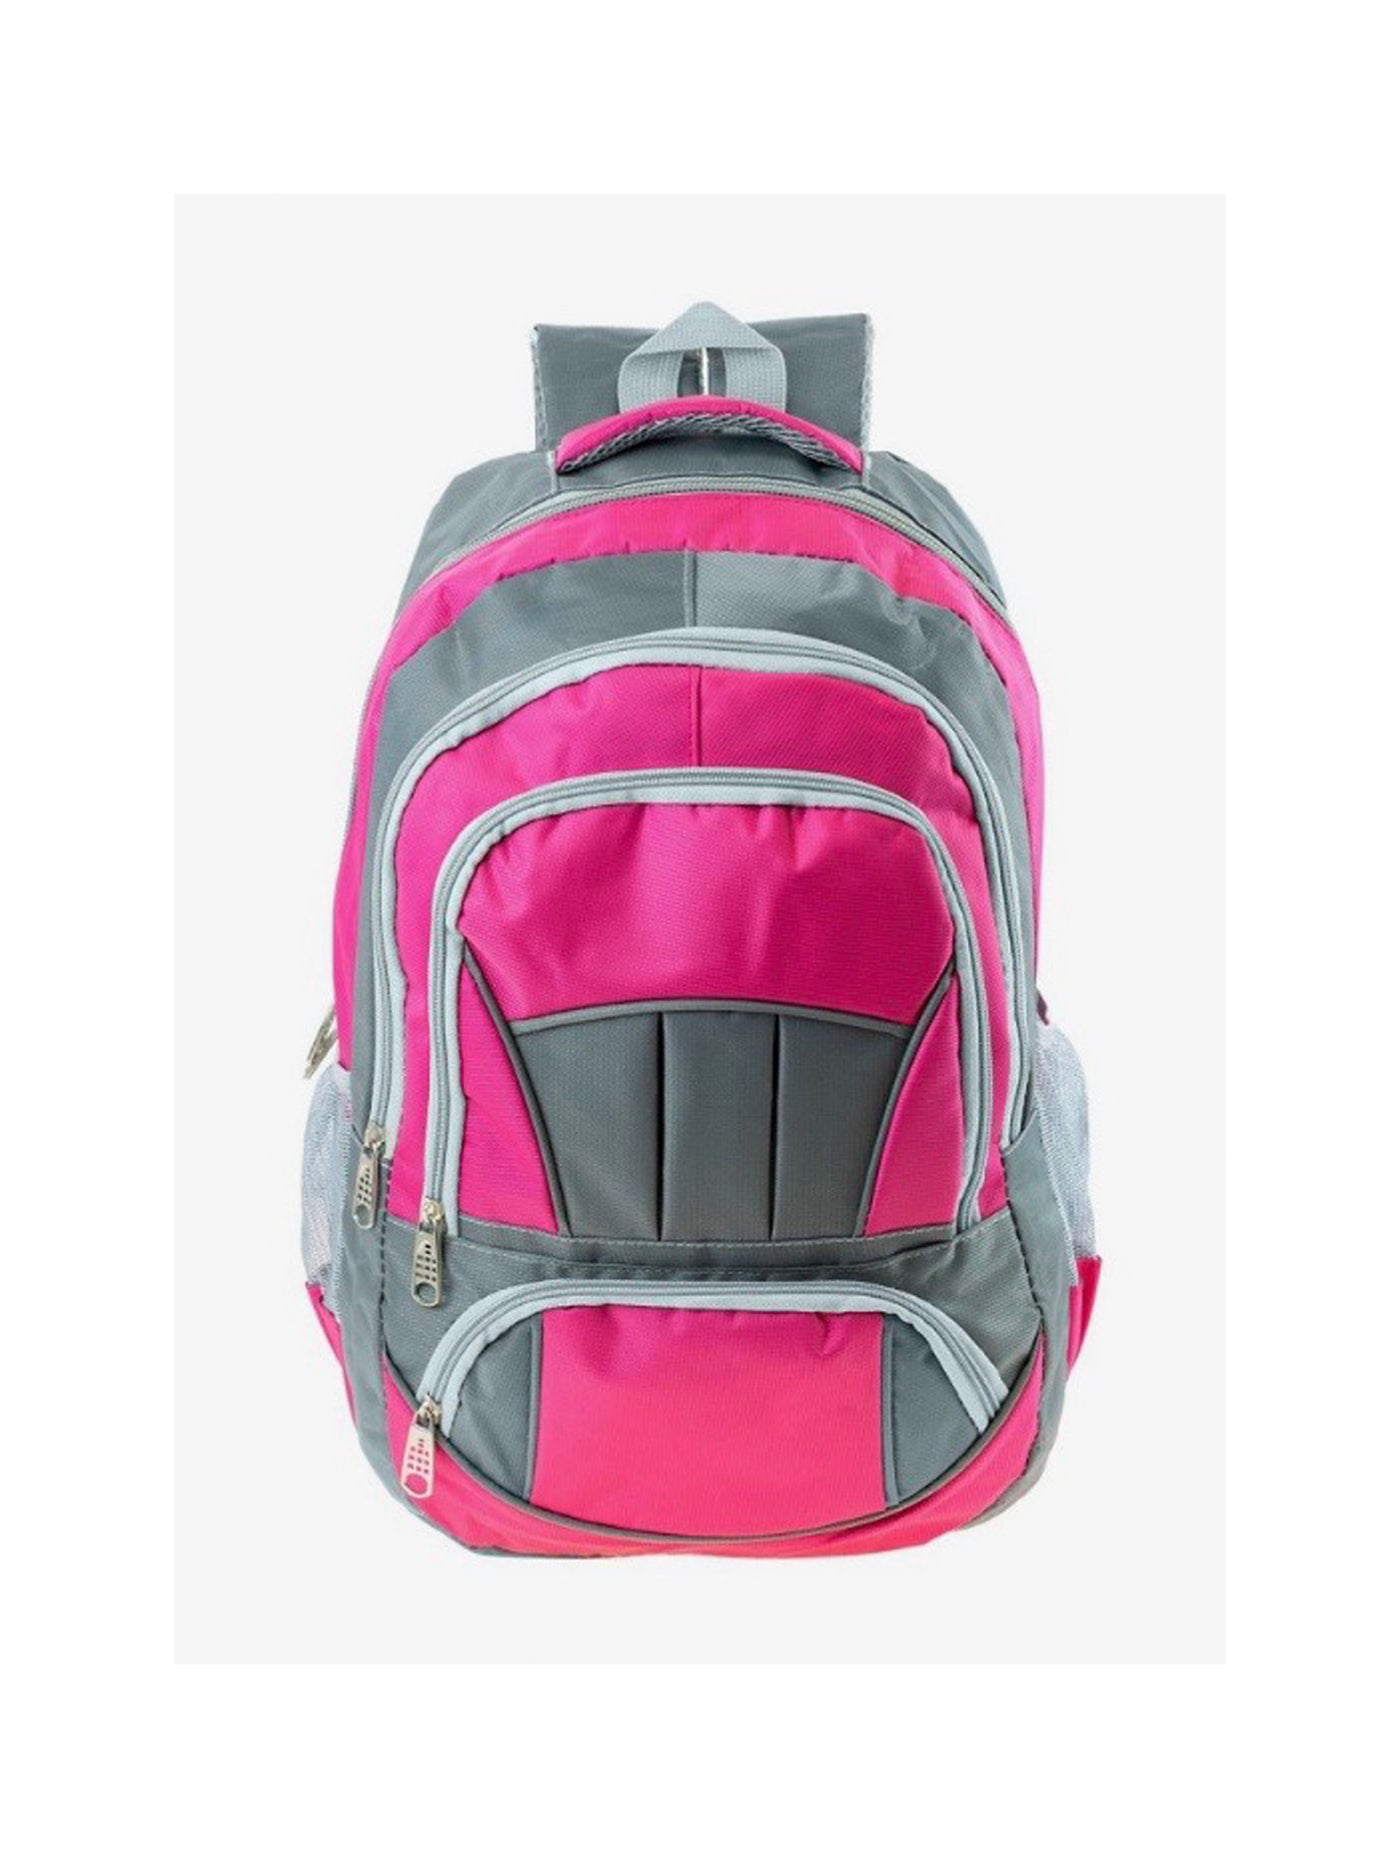 Ballistic Backpack | Innocent Armor keeps you safe everyday